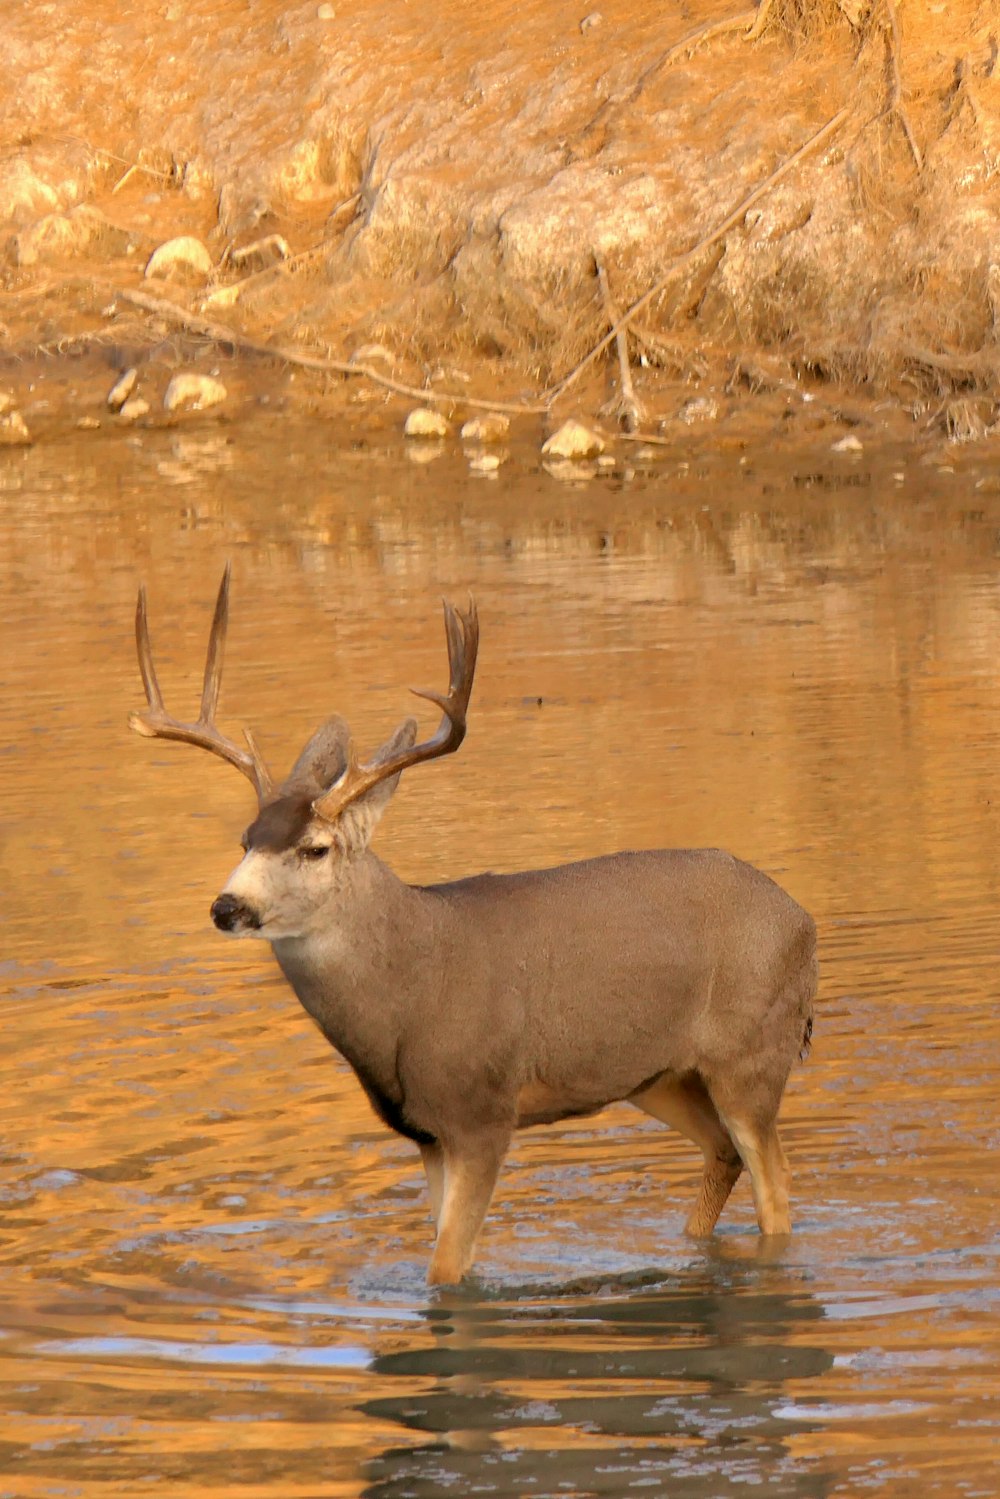 a deer standing in a body of water